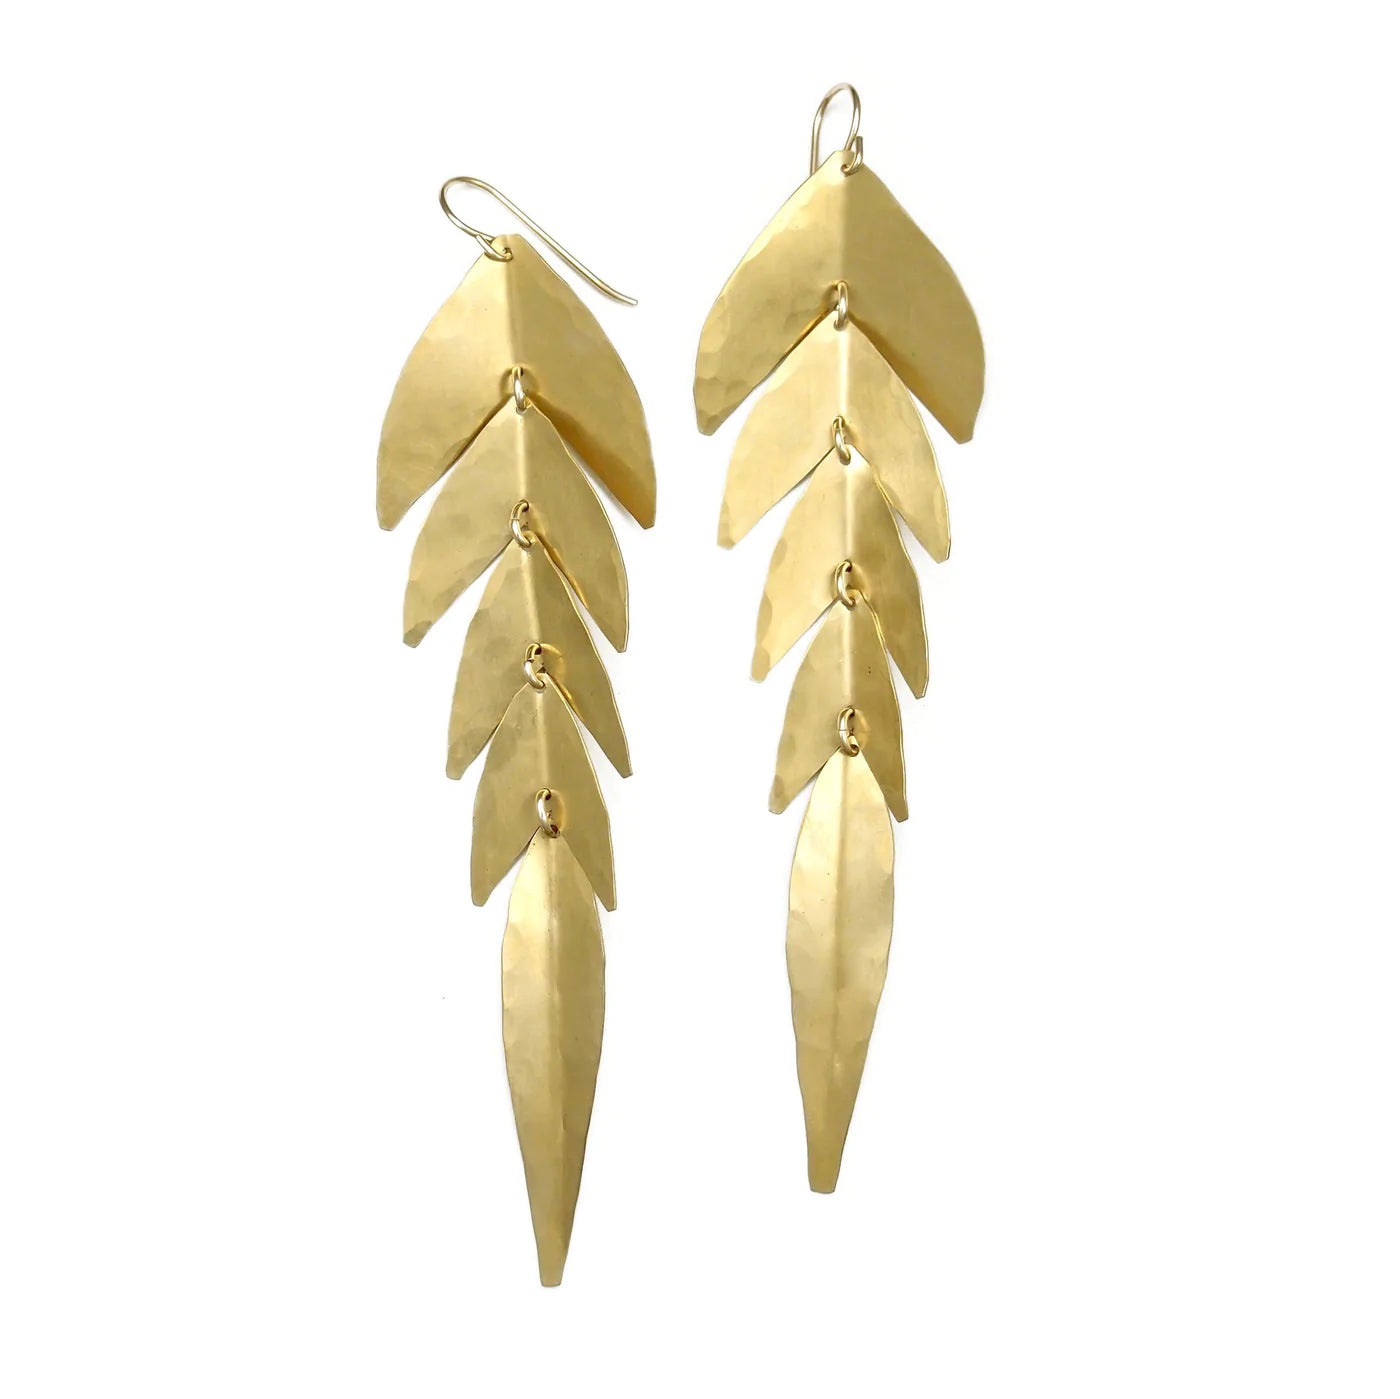 Swish Earring- Gold Fill (2 sizes)